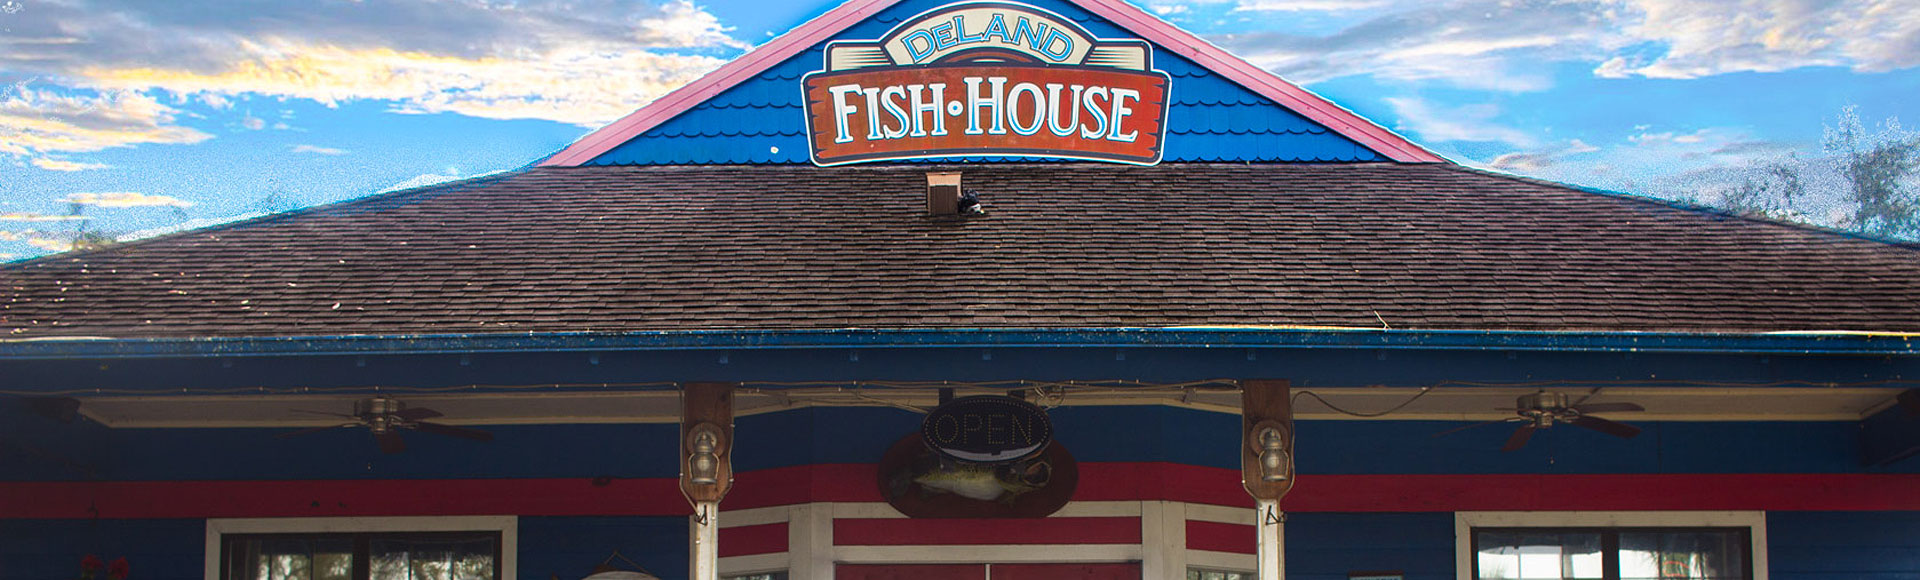 48 Deland fish house menu prices ideas